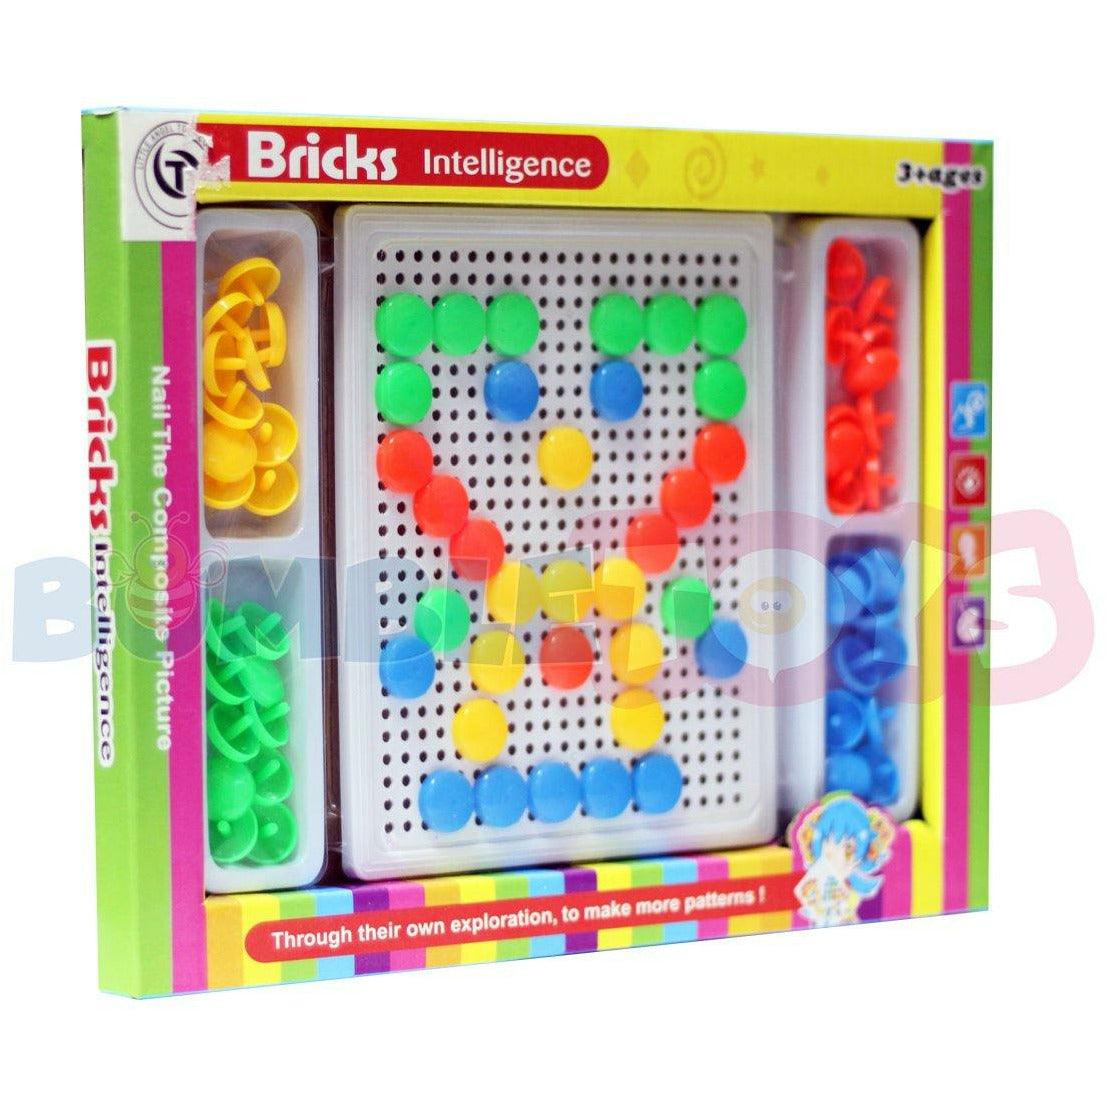 Bricks Intelligence Game Toy For Kids - BumbleToys - 5-7 Years, Electronic Learning, Girls